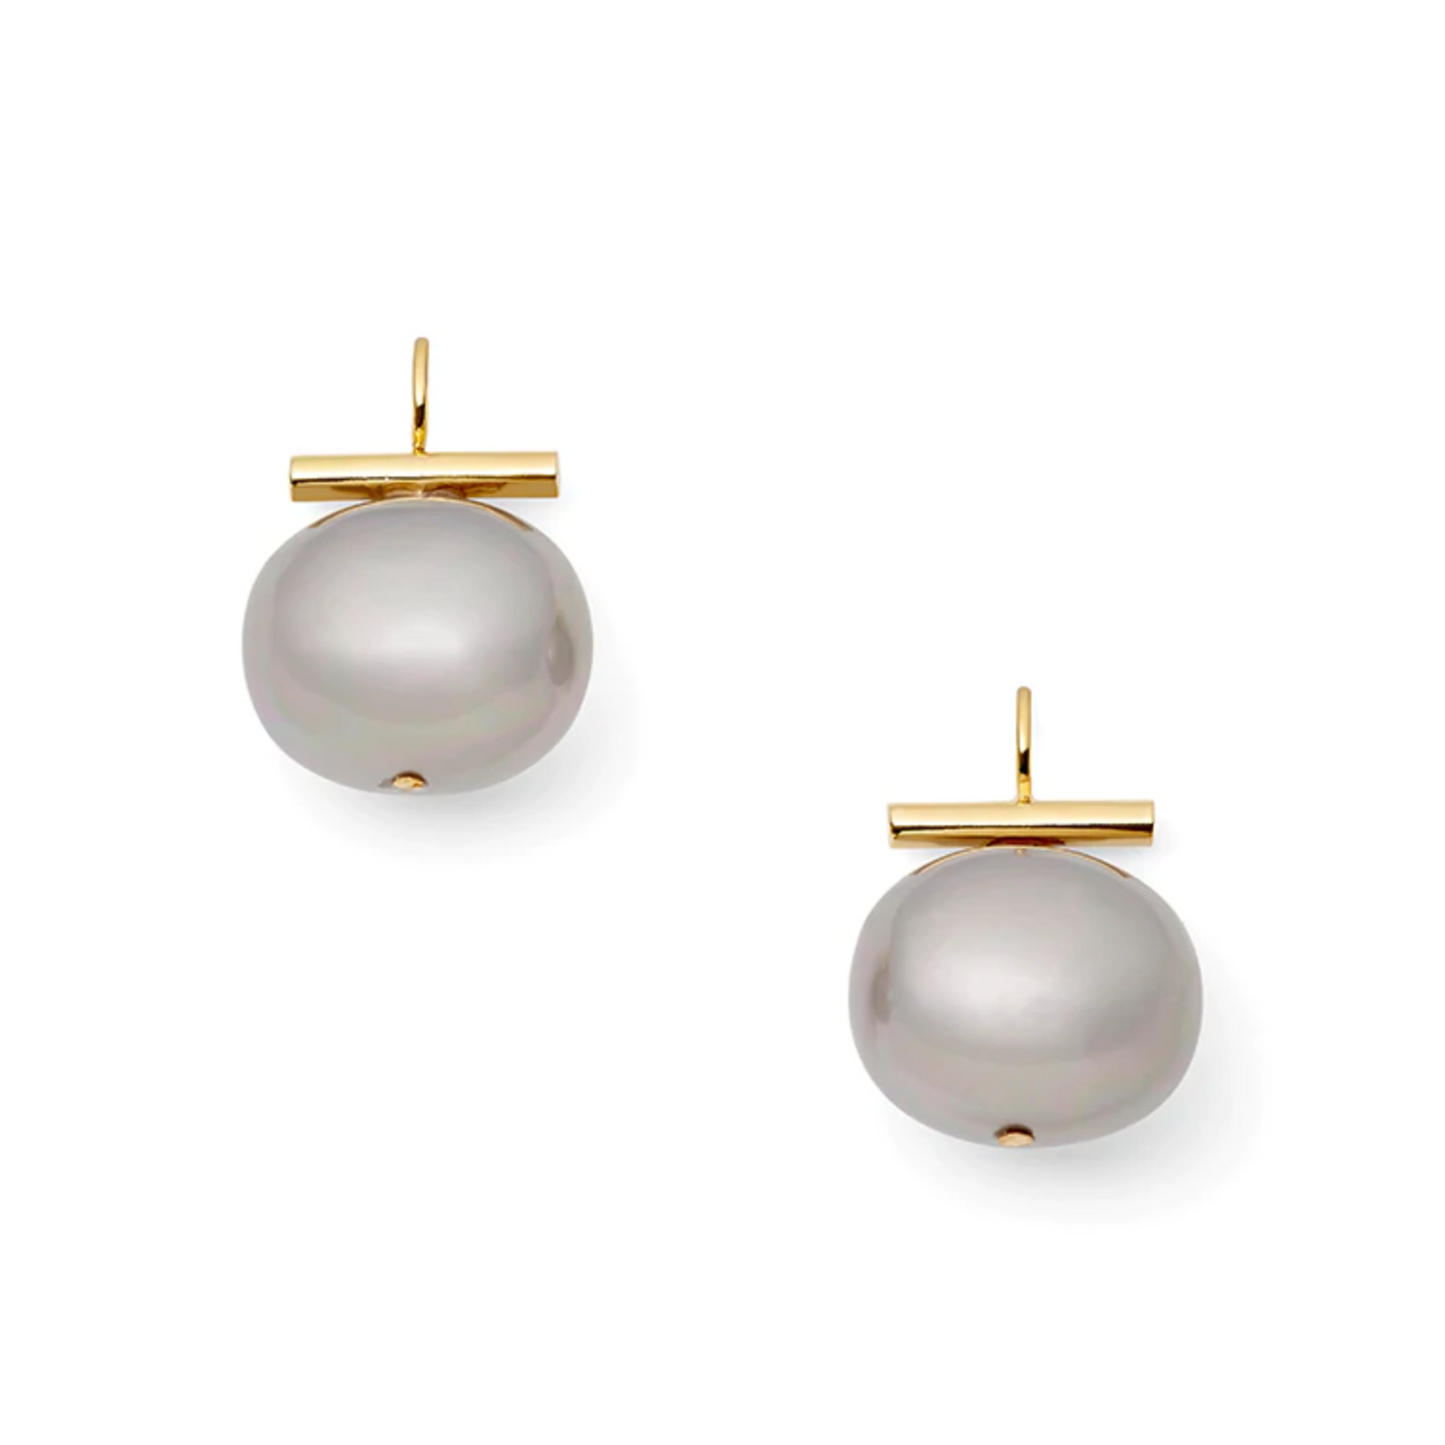 Catherine Canino, Medium Pebble Pearl Earrings